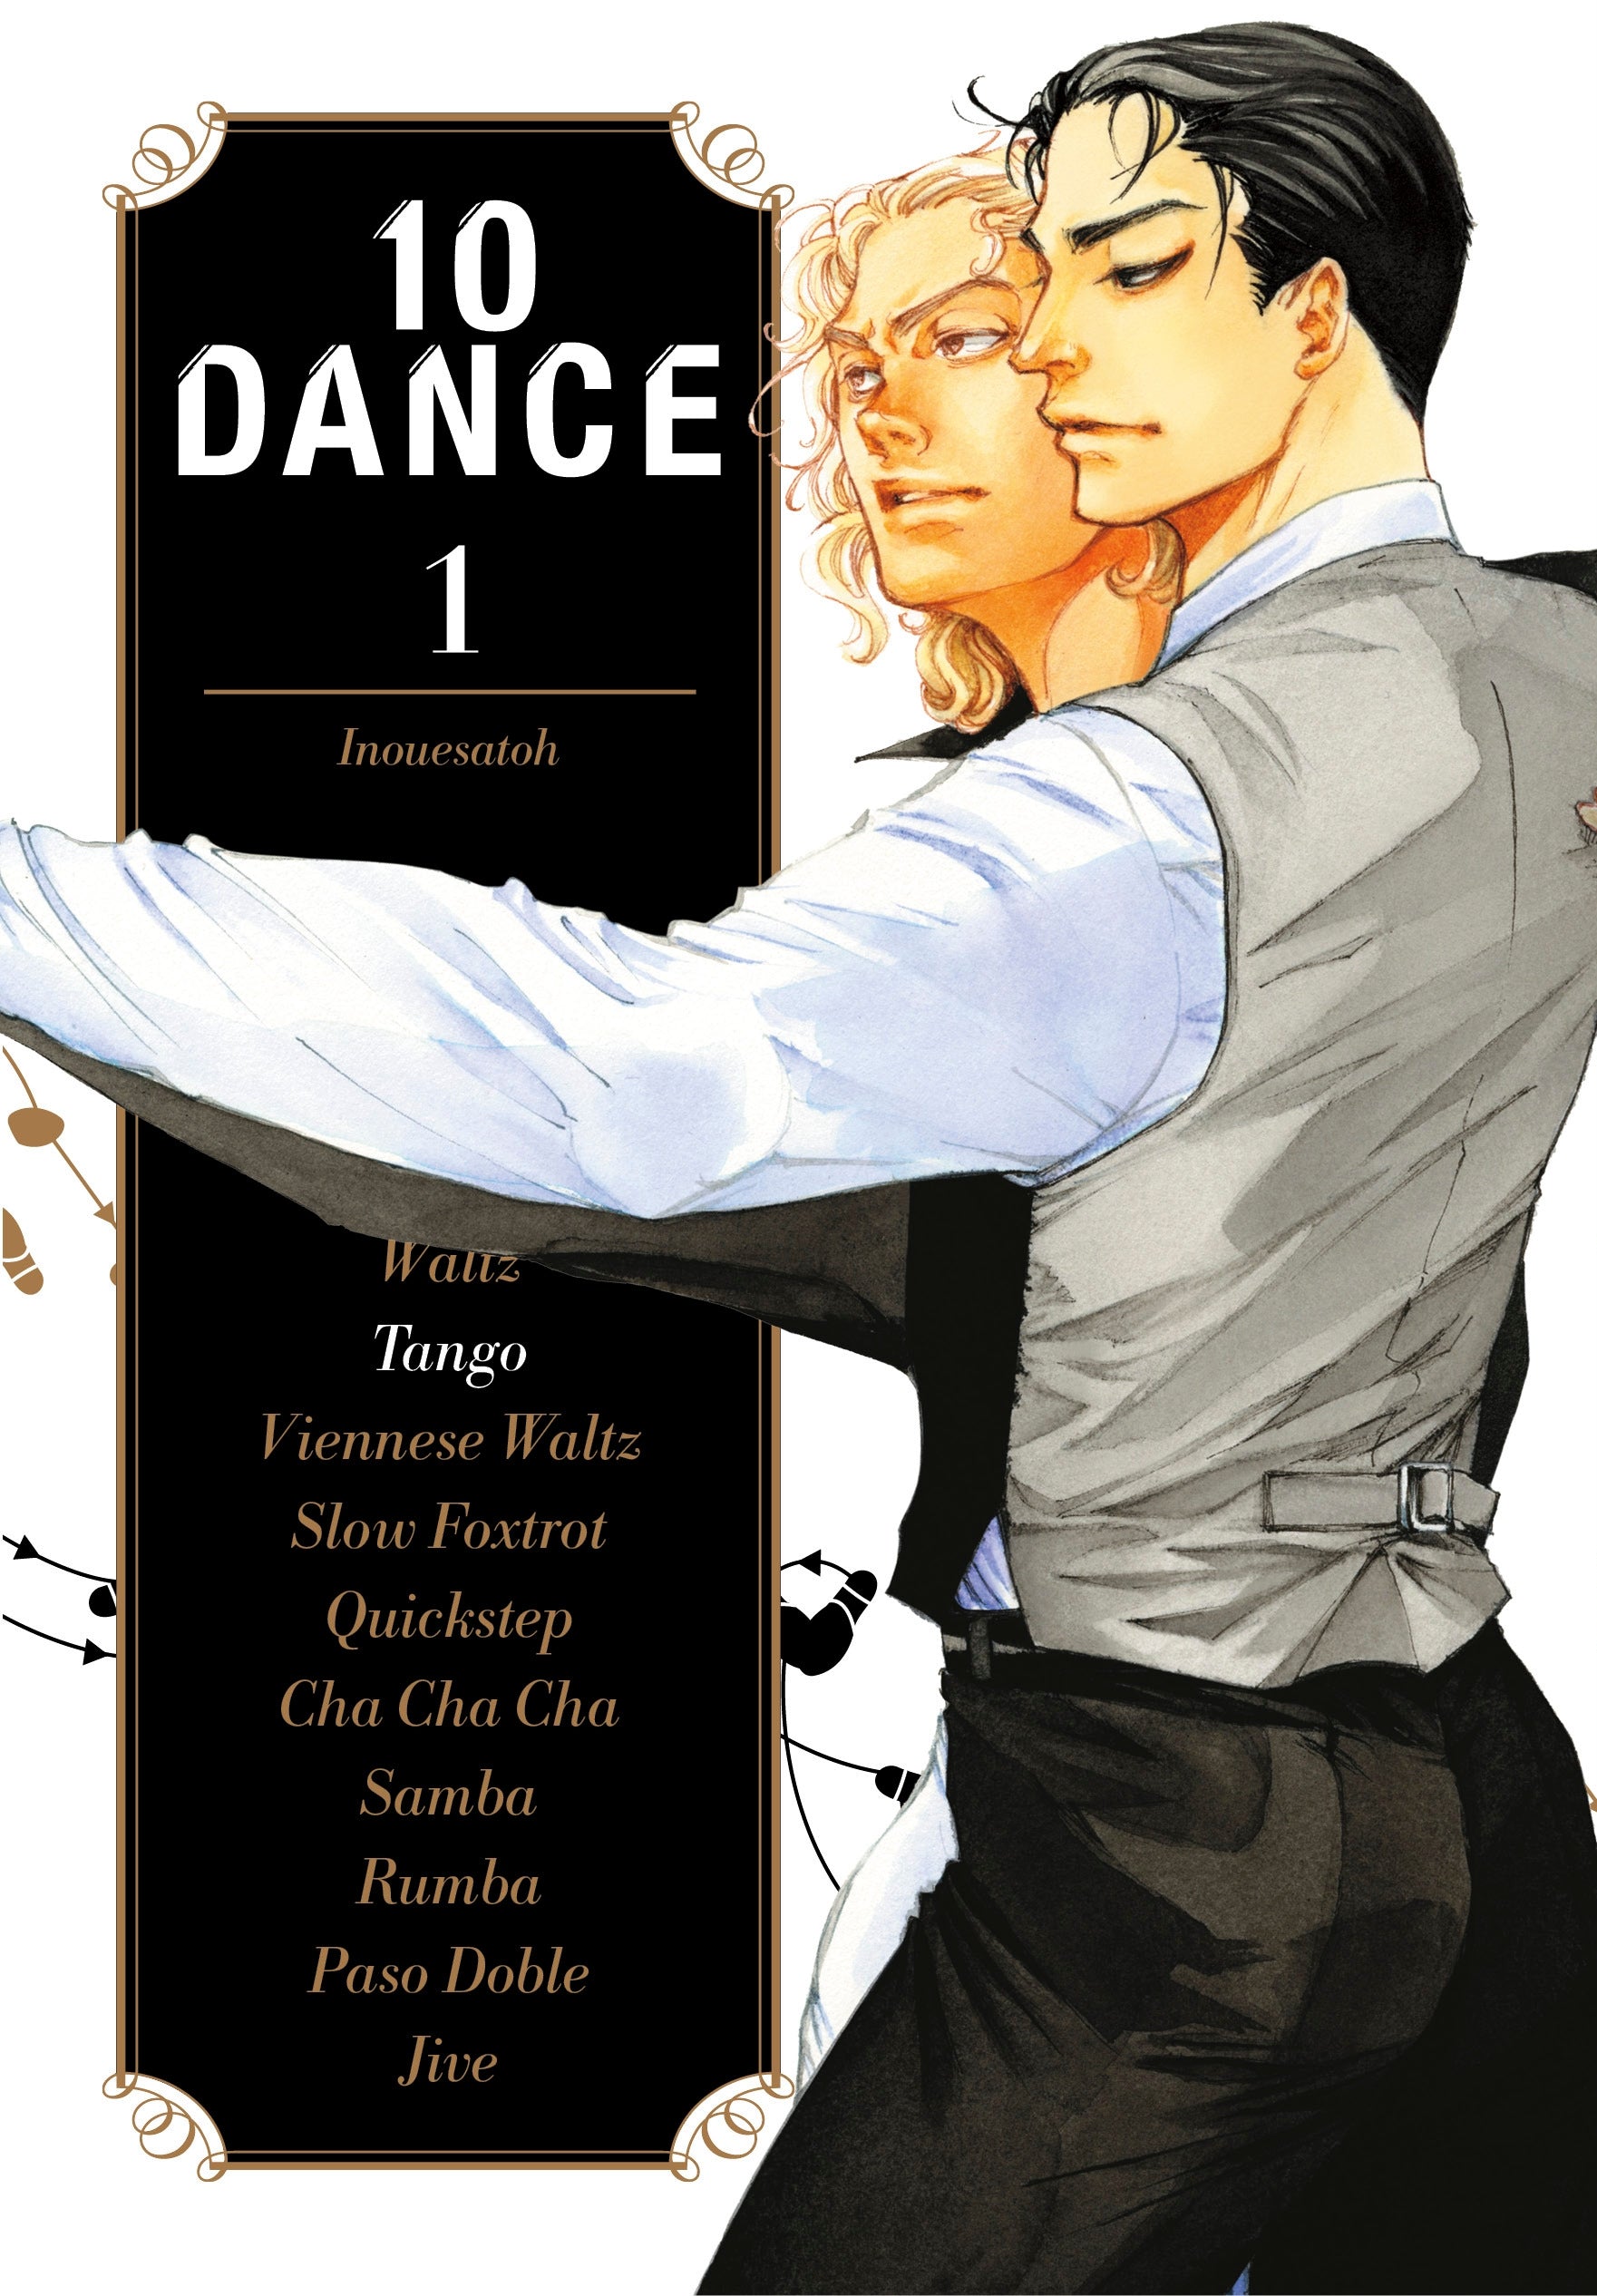 10 DANCE, Vol. 1